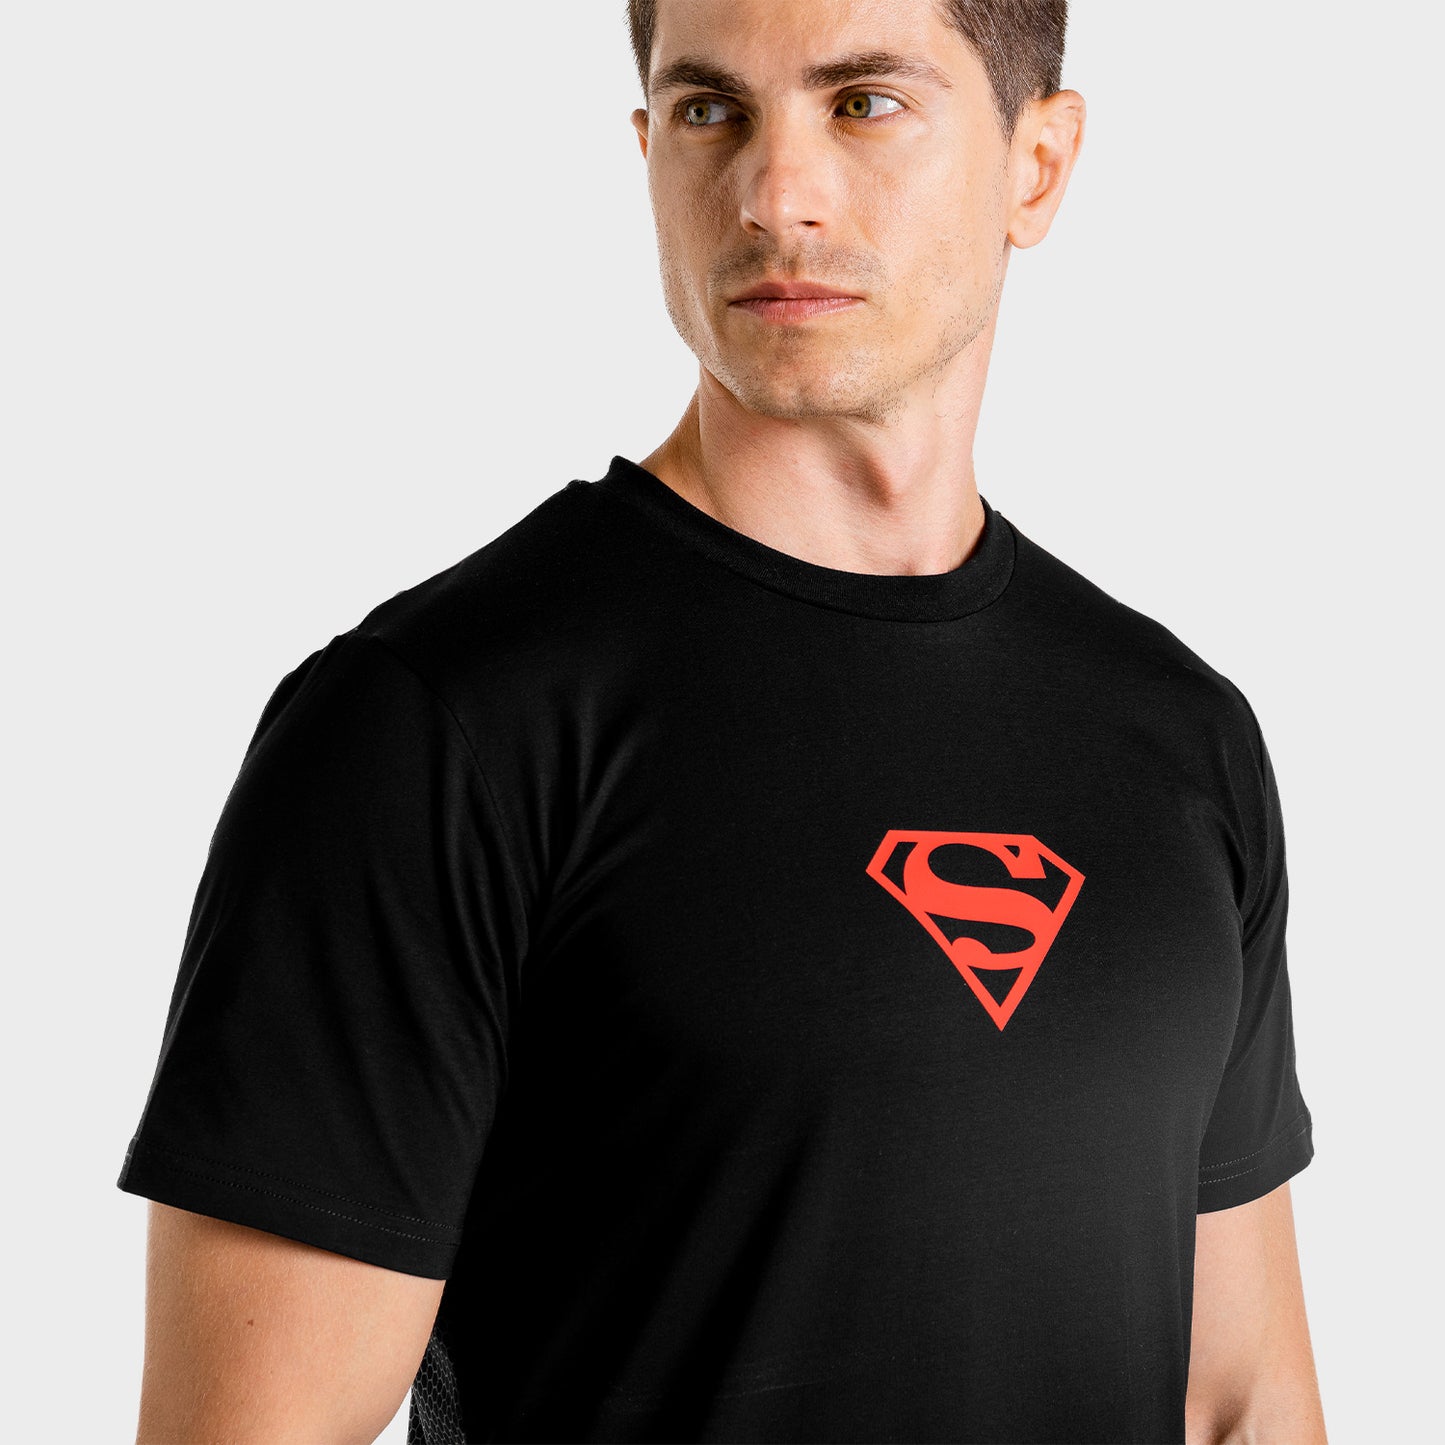 squatwolf-workout-shirts-for-men-superman-gym-tee-black-gym-wear